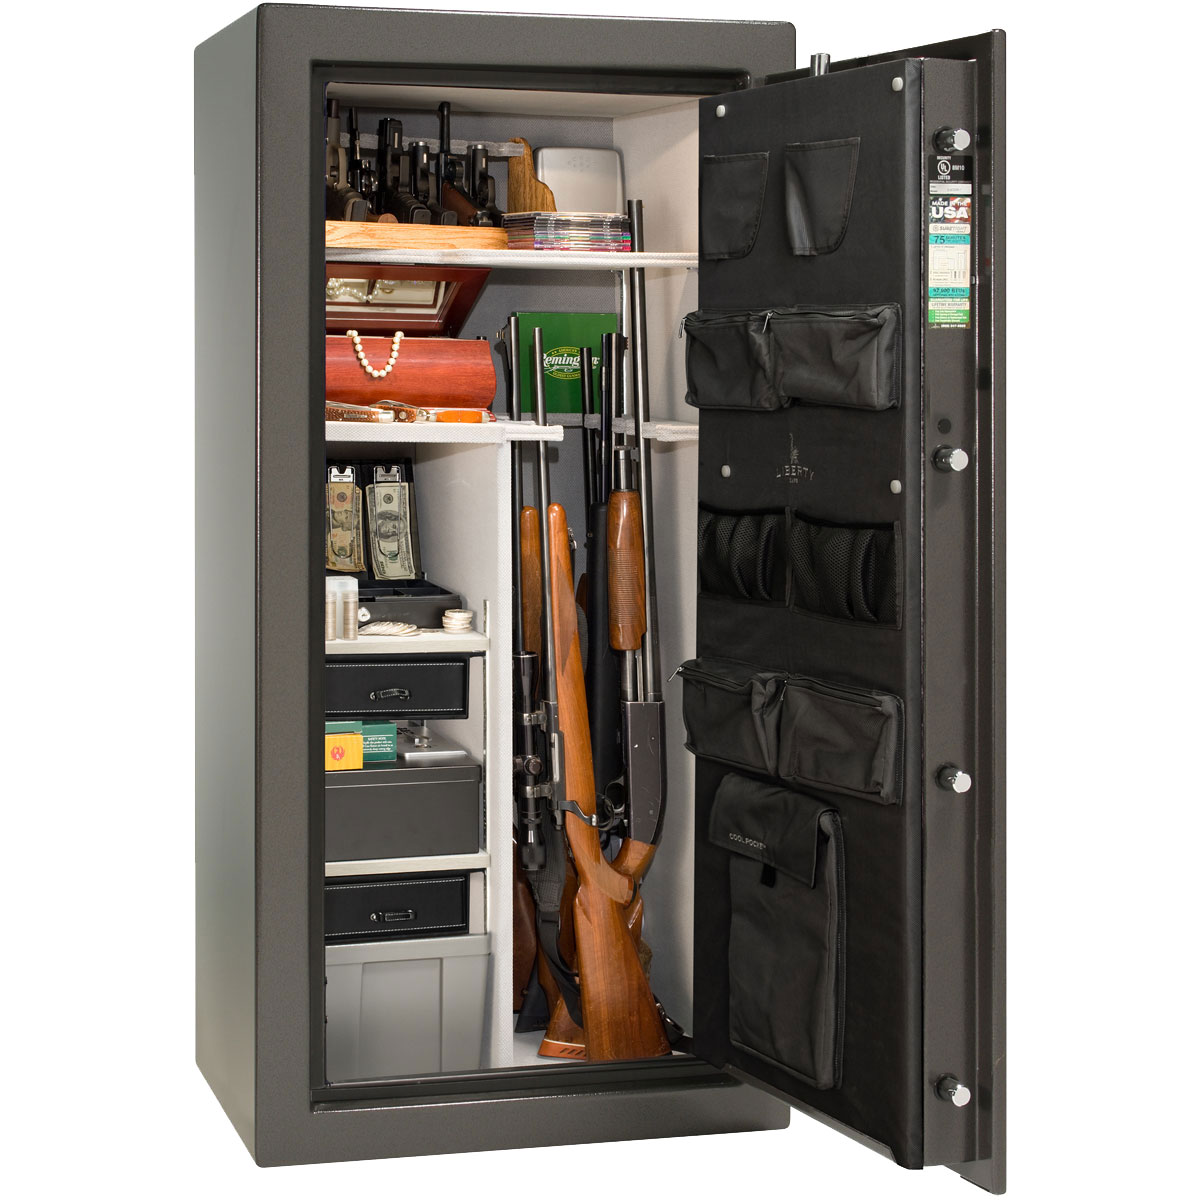 open liberty gun safe